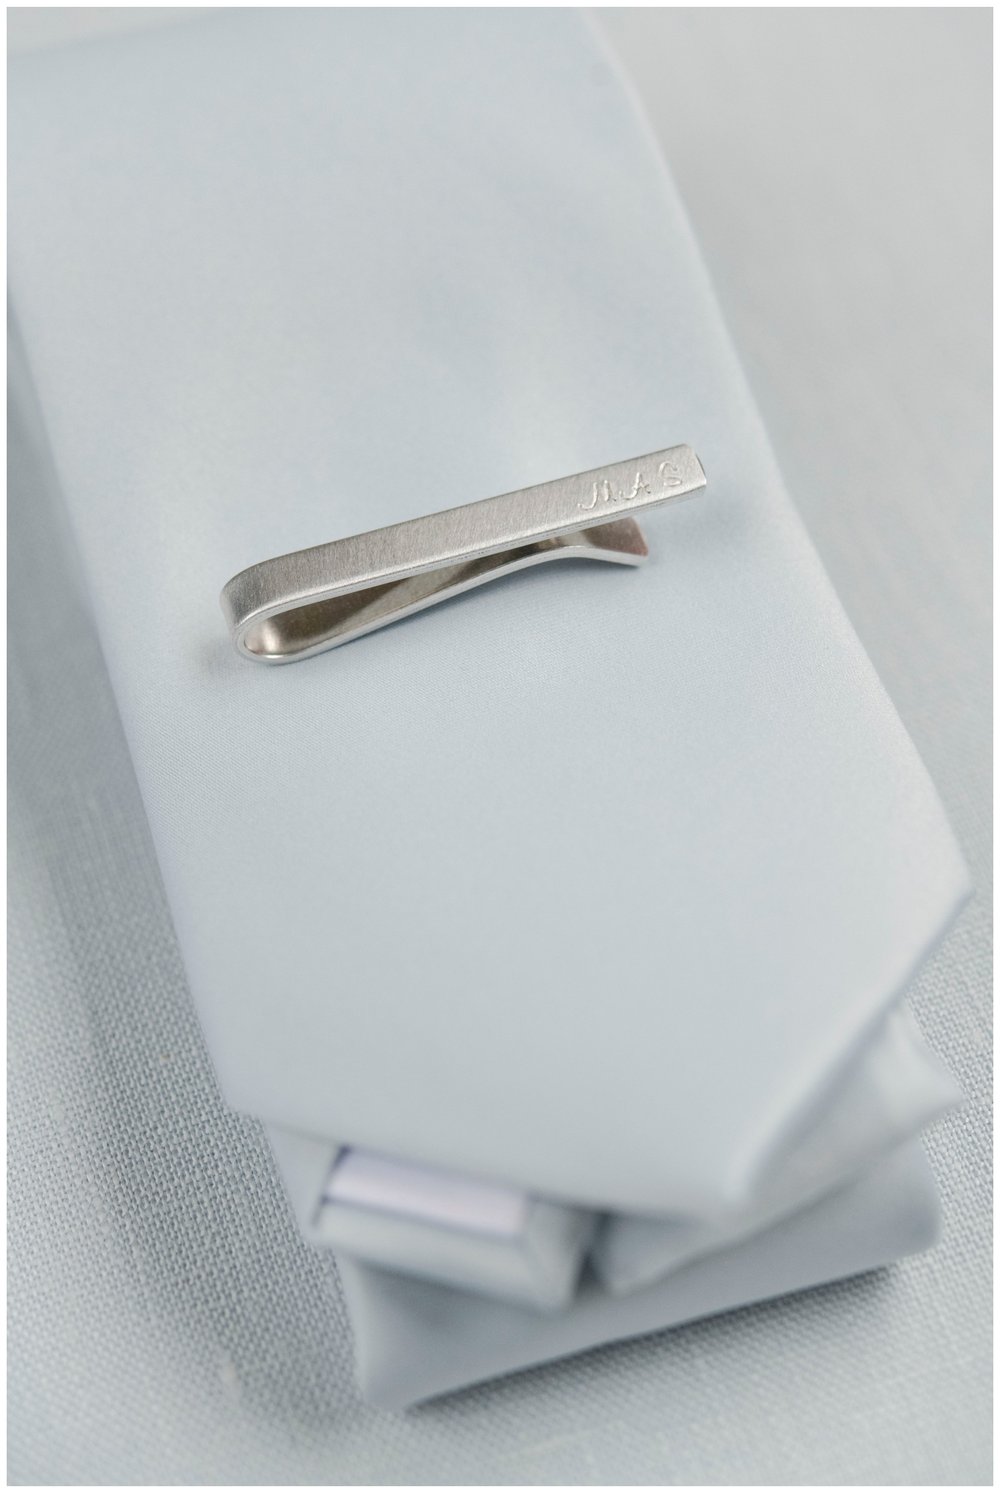 gray tie and clip